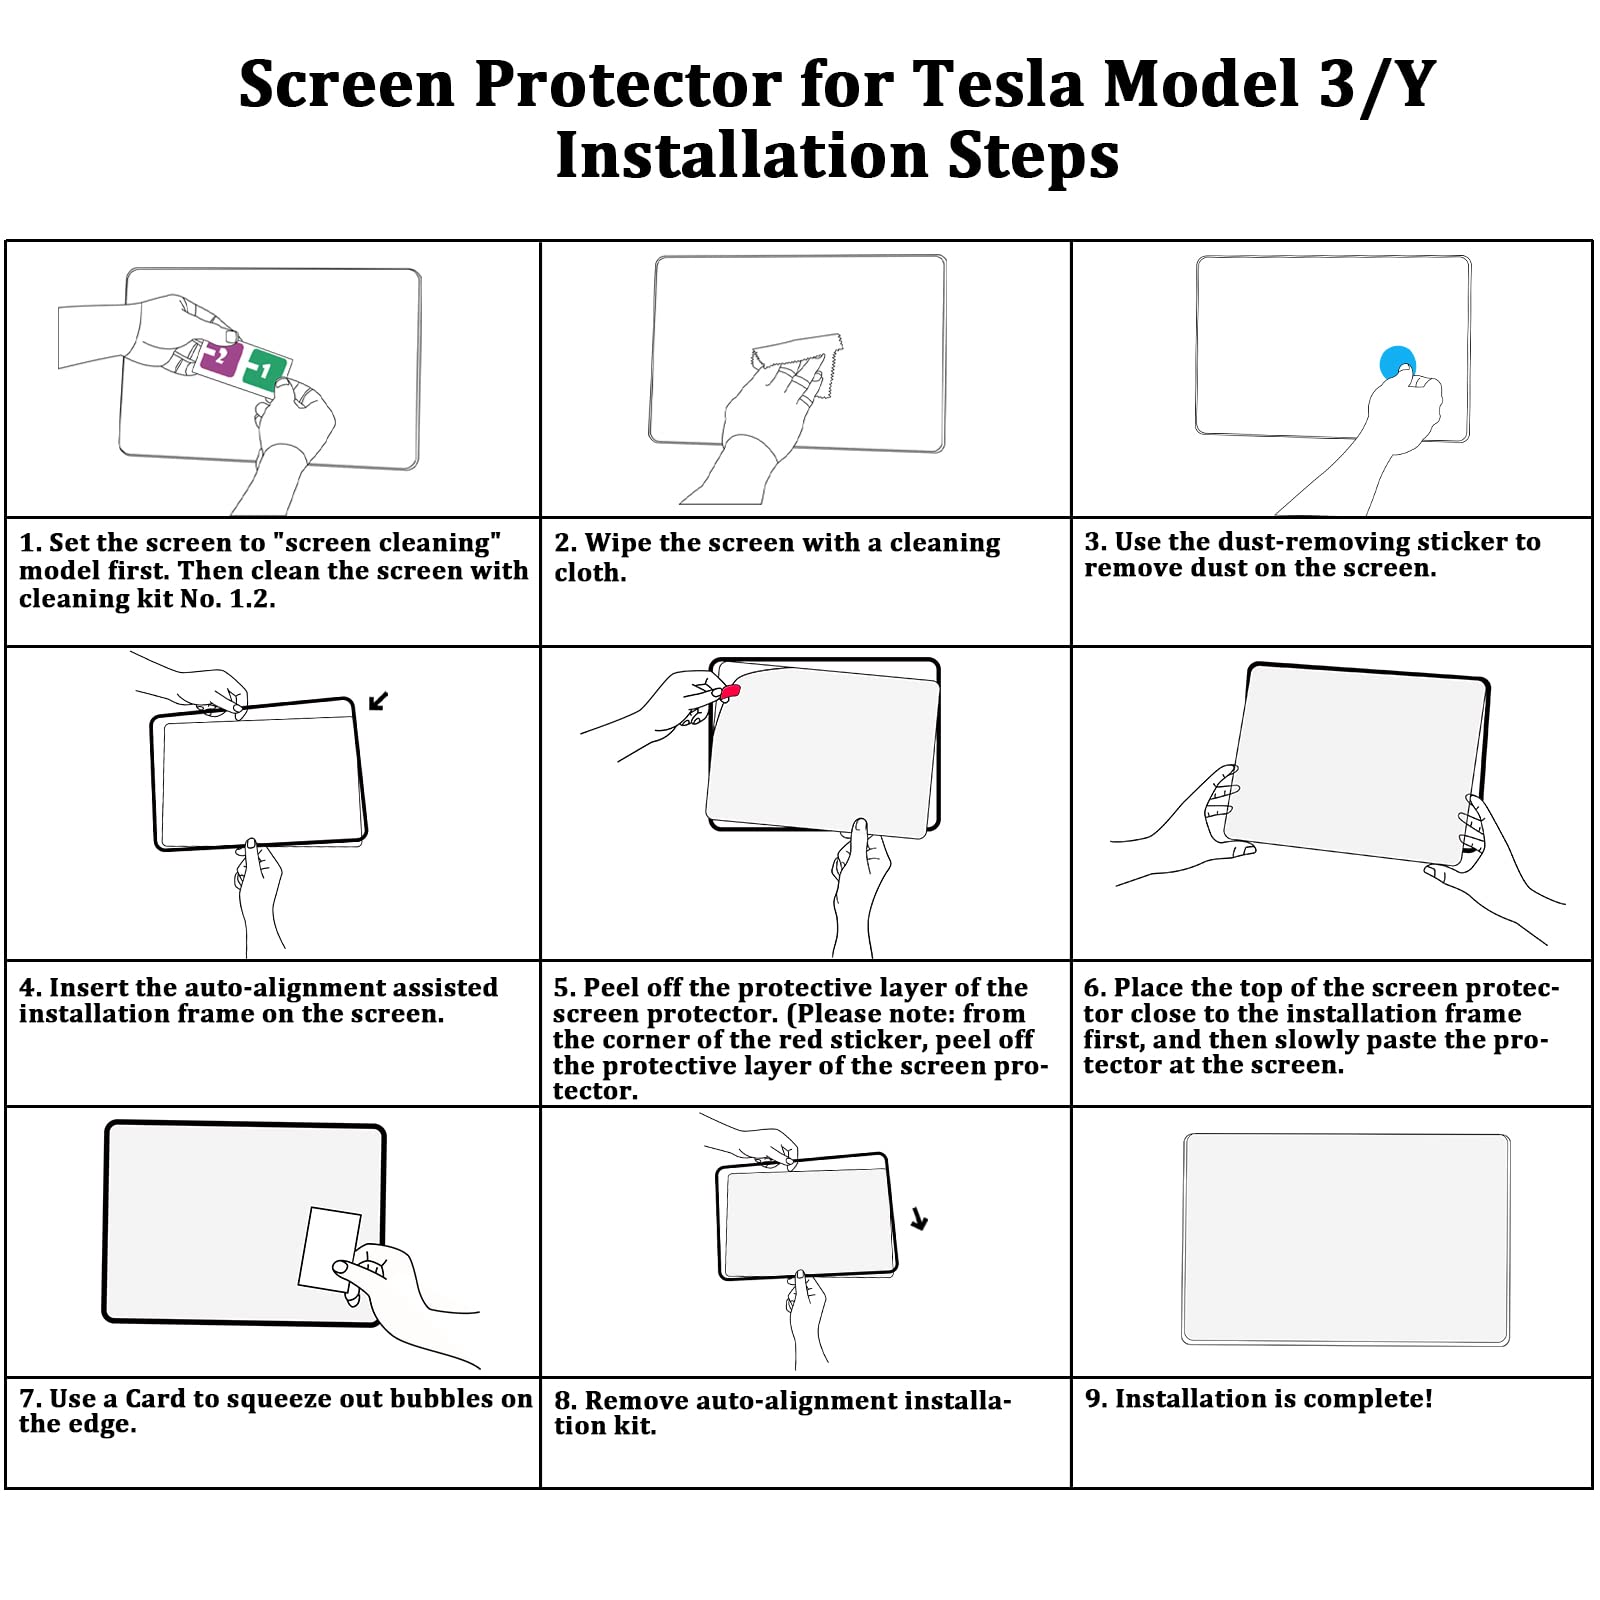 Carwiner Matte Screen Protector Compatible with Tesla Model 3 Model Y 15